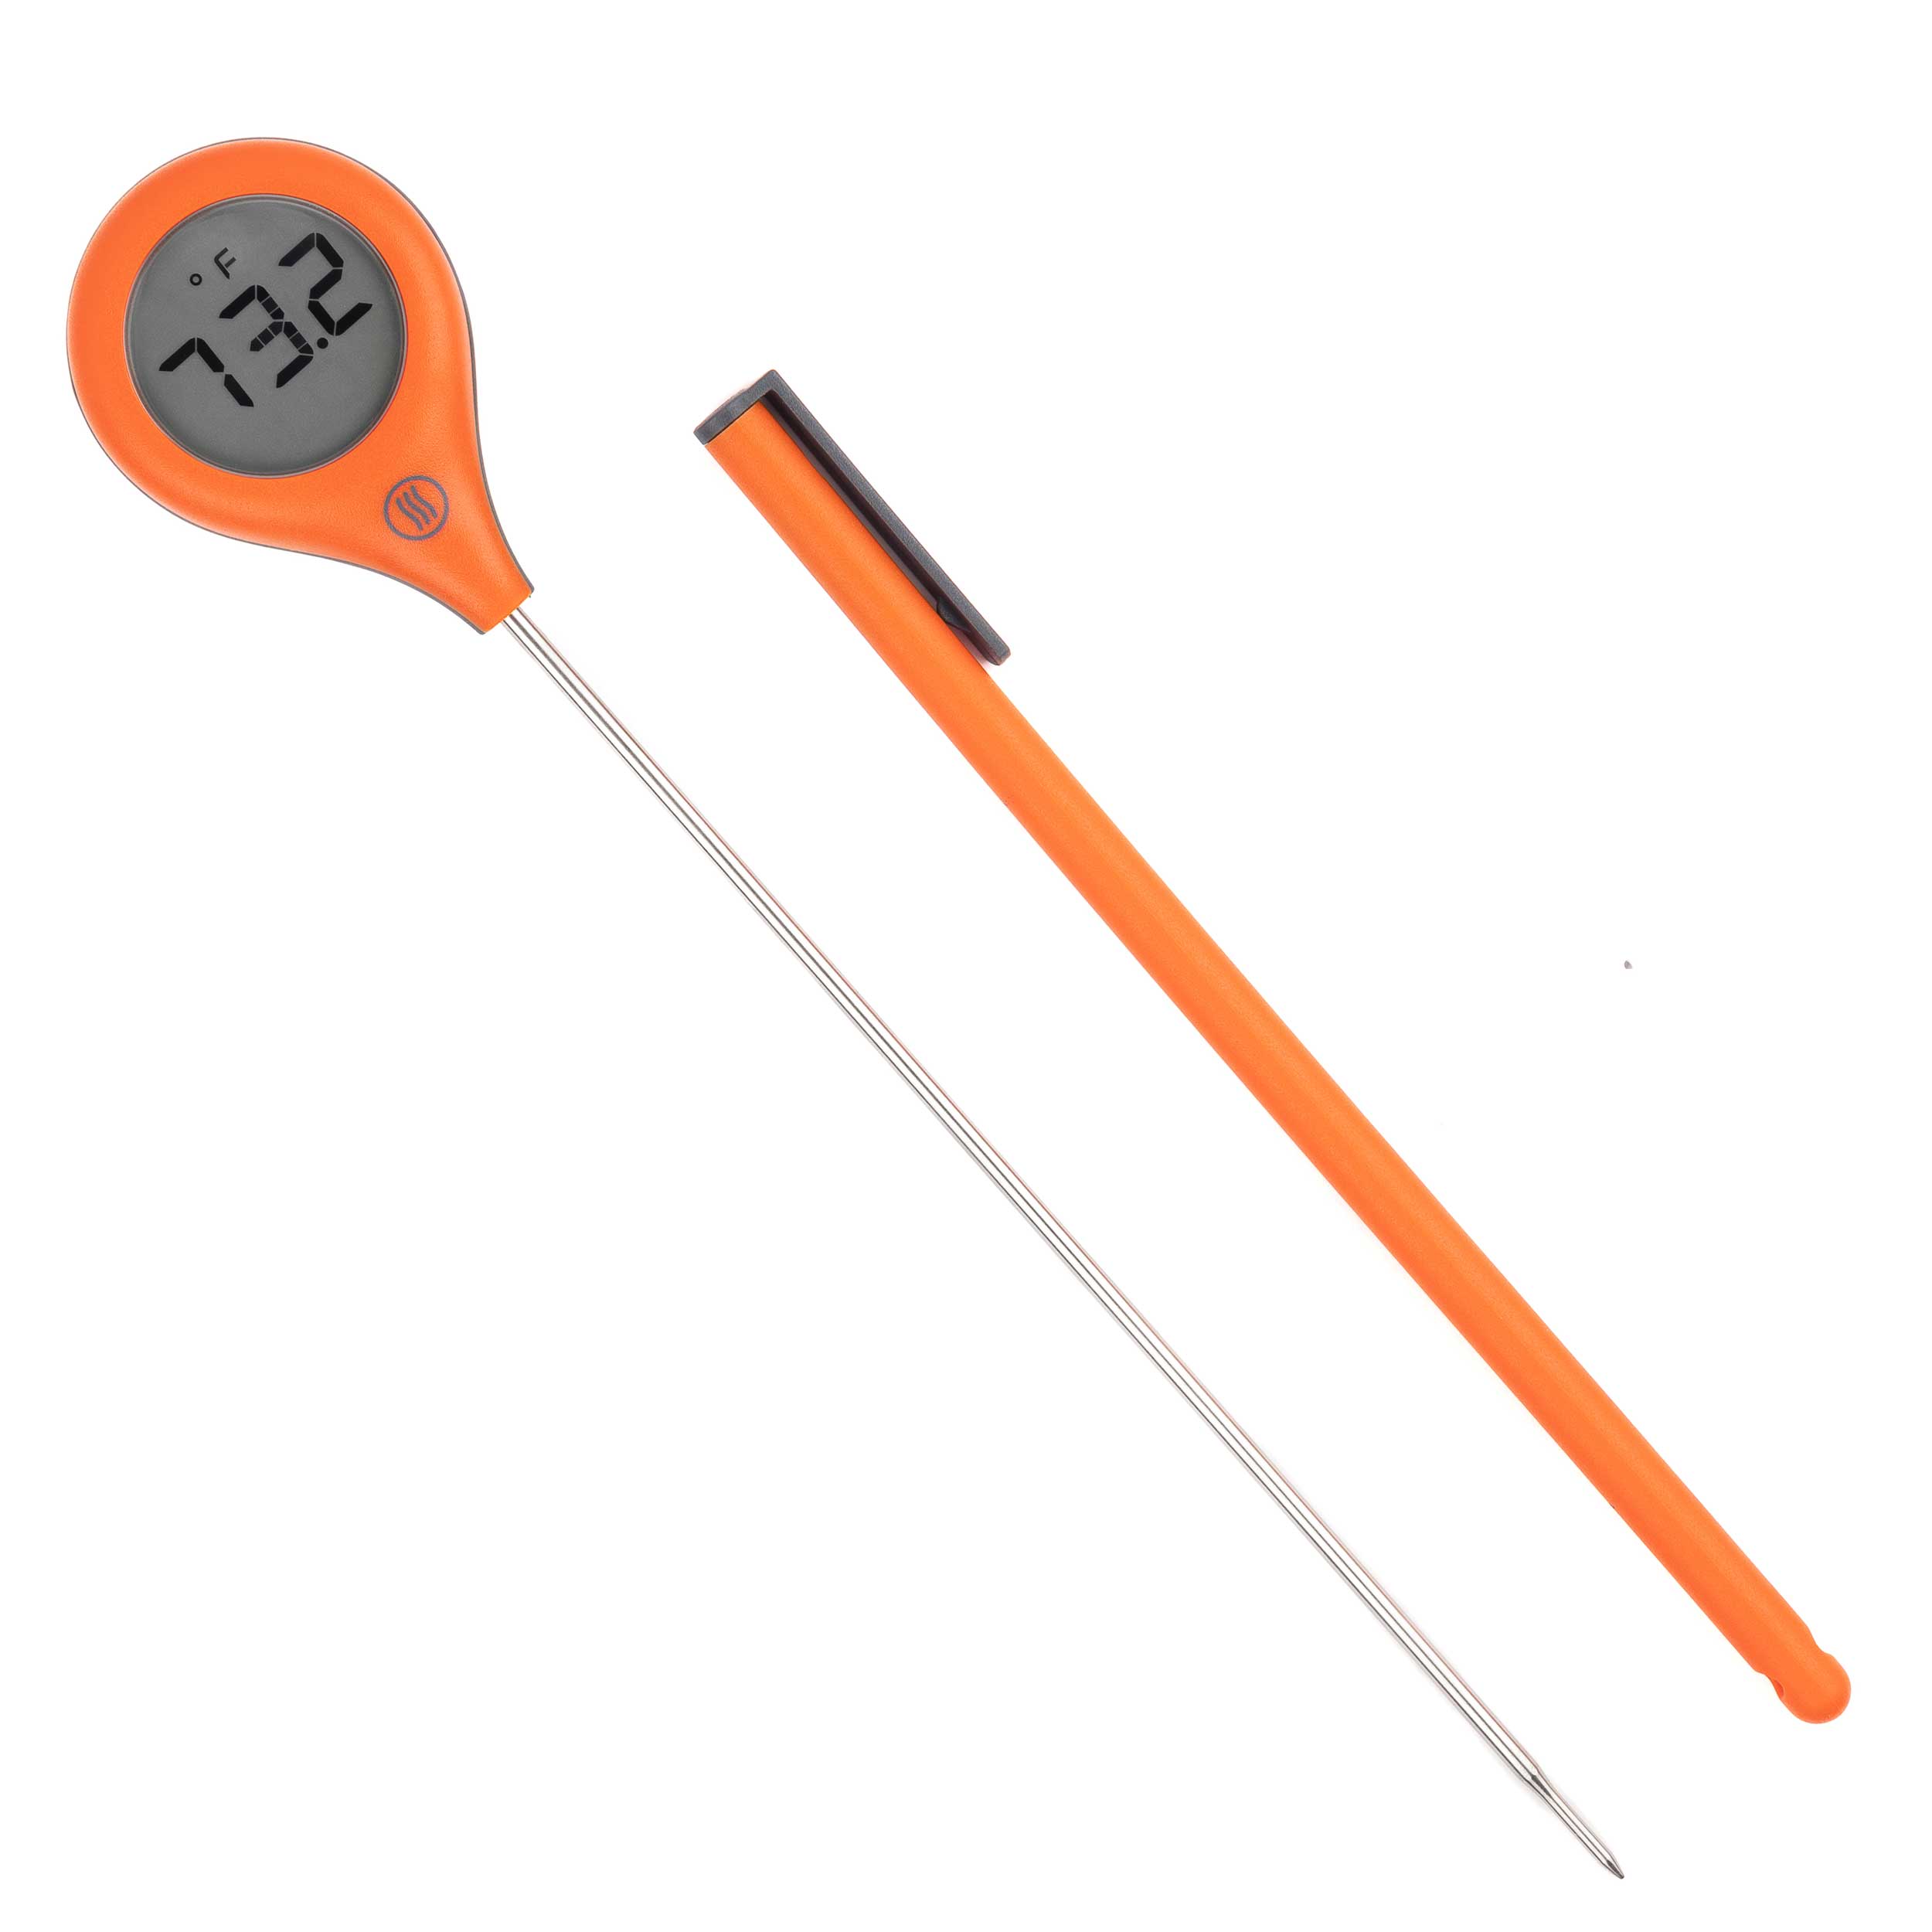 ThermoPop® Super-Fast® Thermometer - Orange – Char Crust® Dry-Rub Seasonings